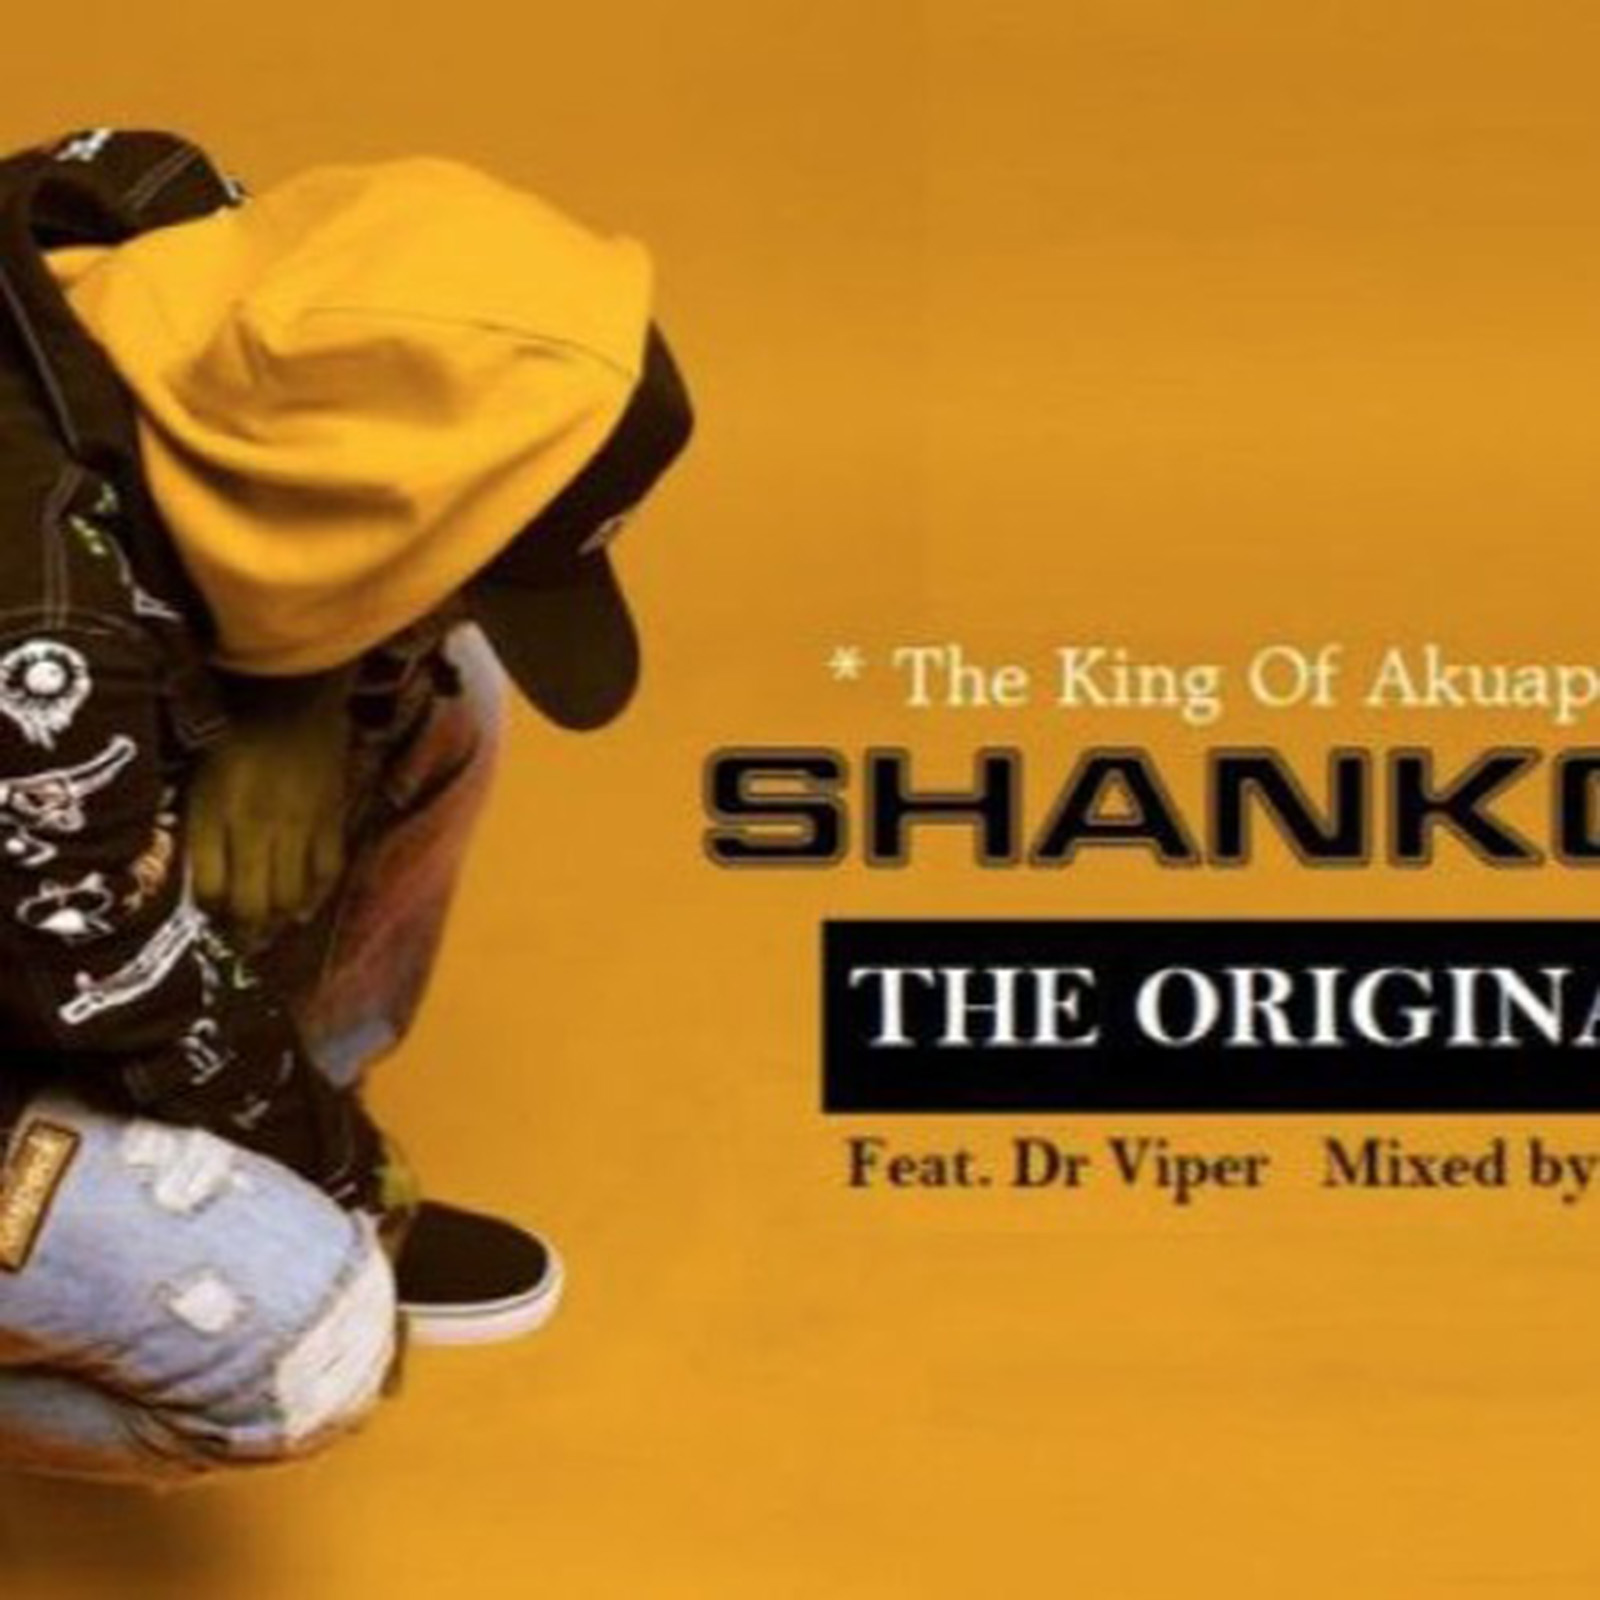 The Originator by Shankoma feat. Dr. Viper